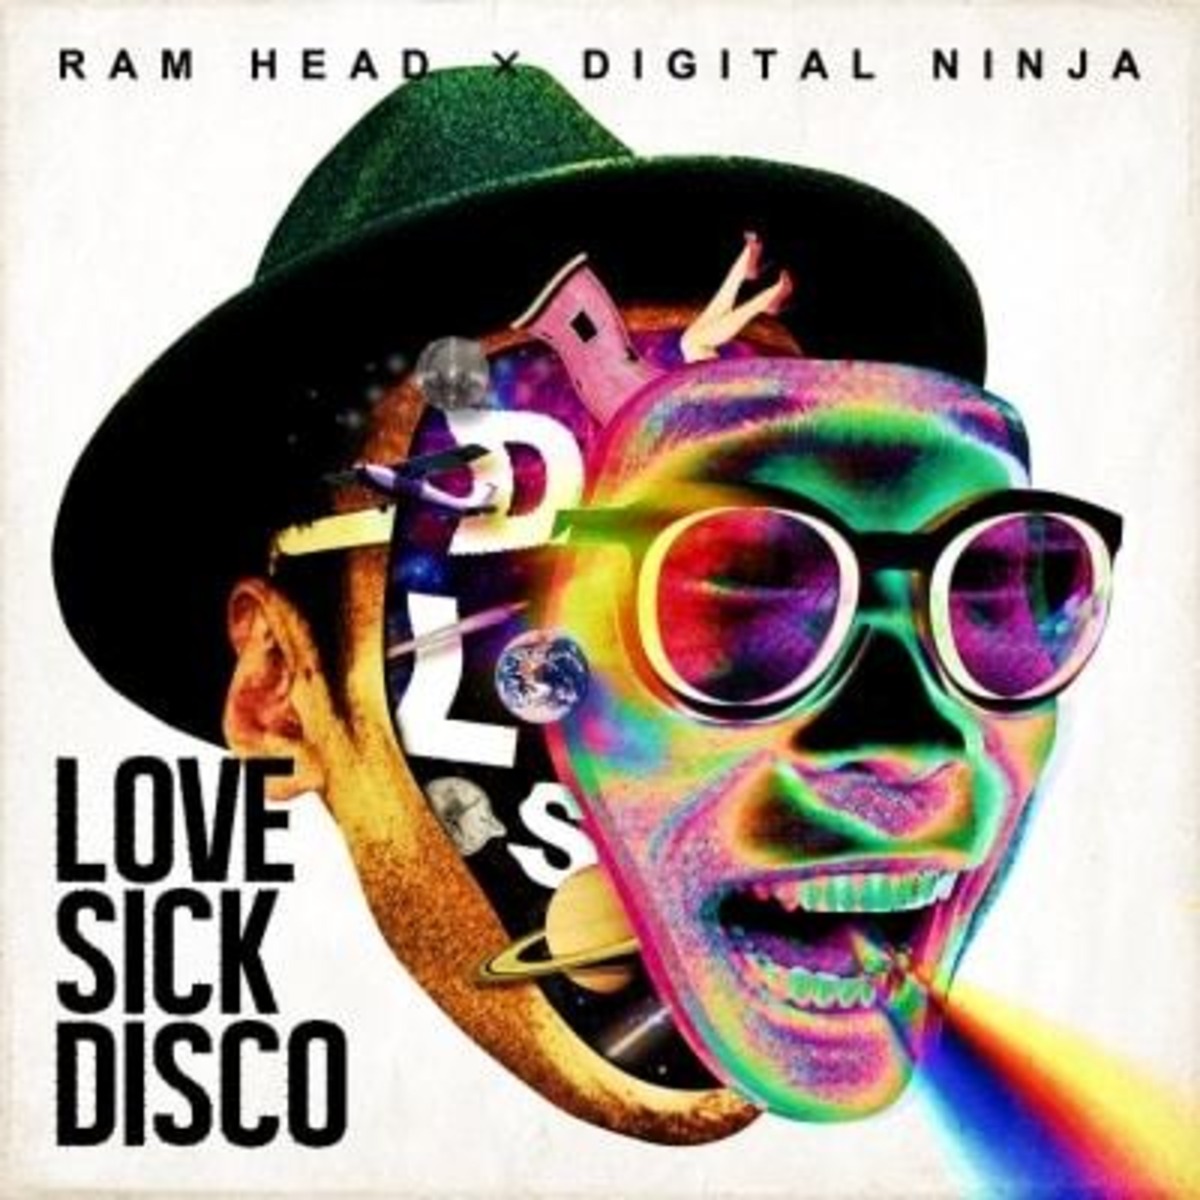 RAM HEAD × DIGITAL NINJA "LOVE SICK DISCO" | DIGITAL NINJA STORE